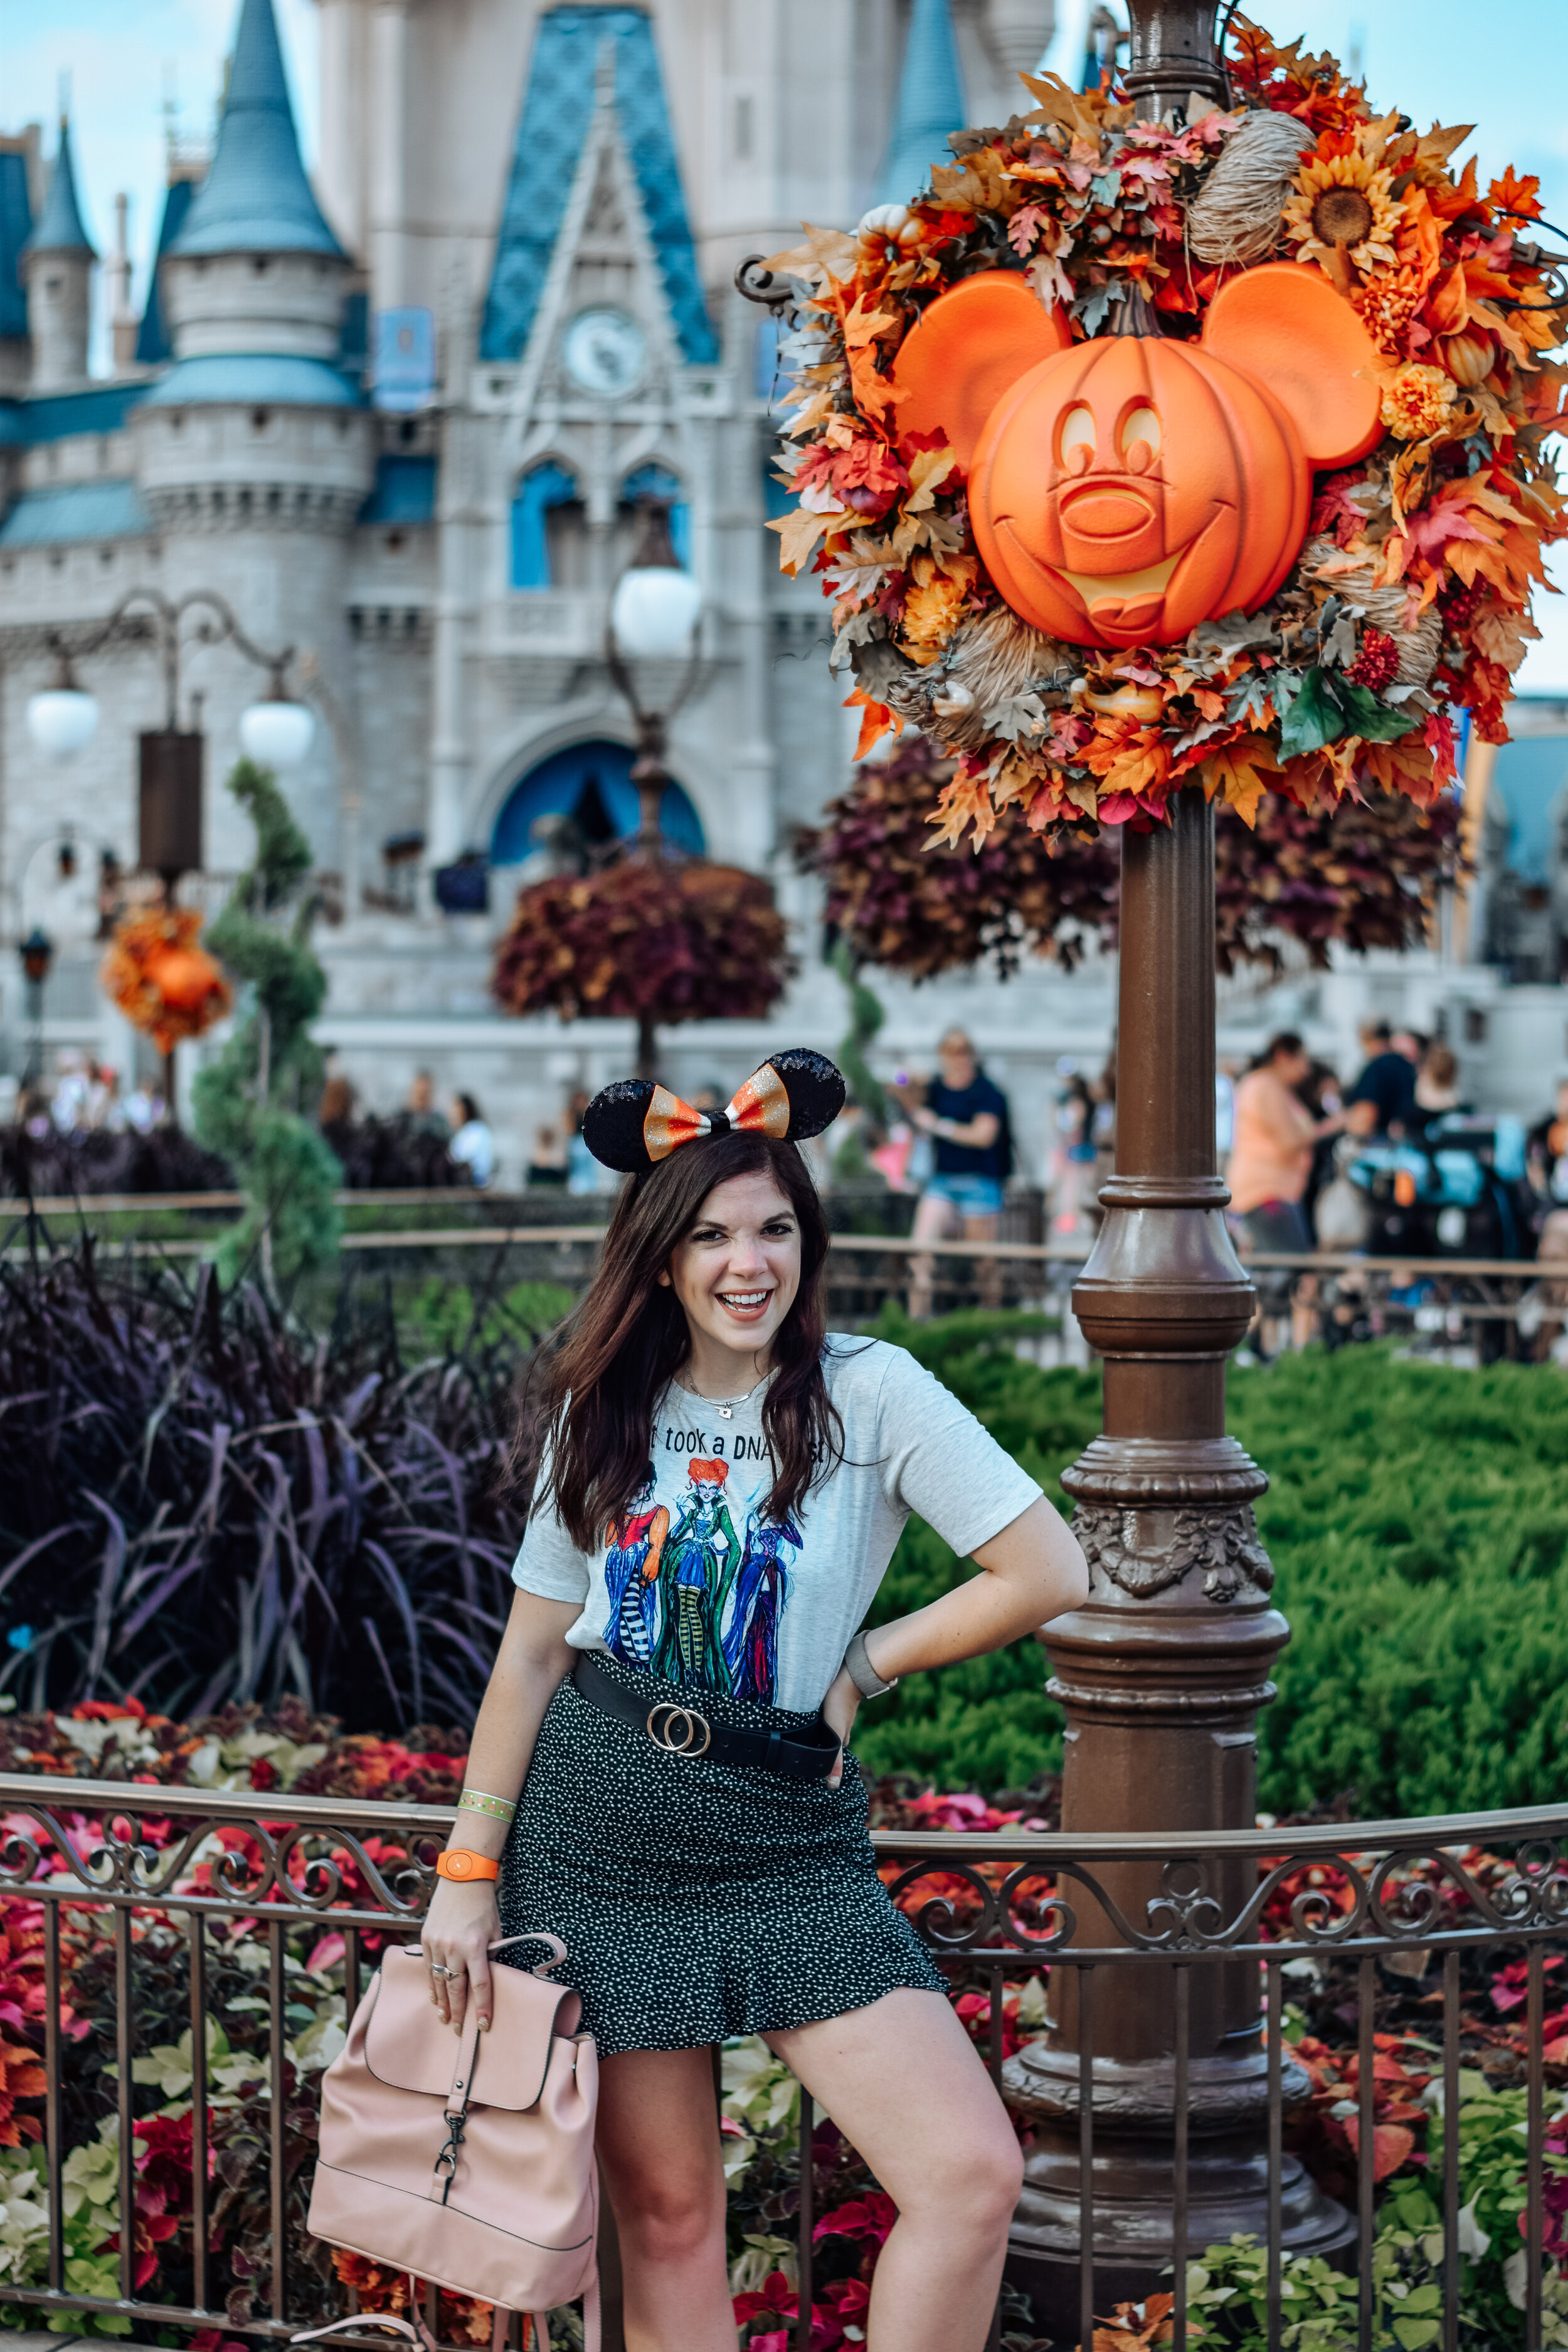 woman holding a bag, wearing white shirt and skirt celebrating Halloween at Disney World